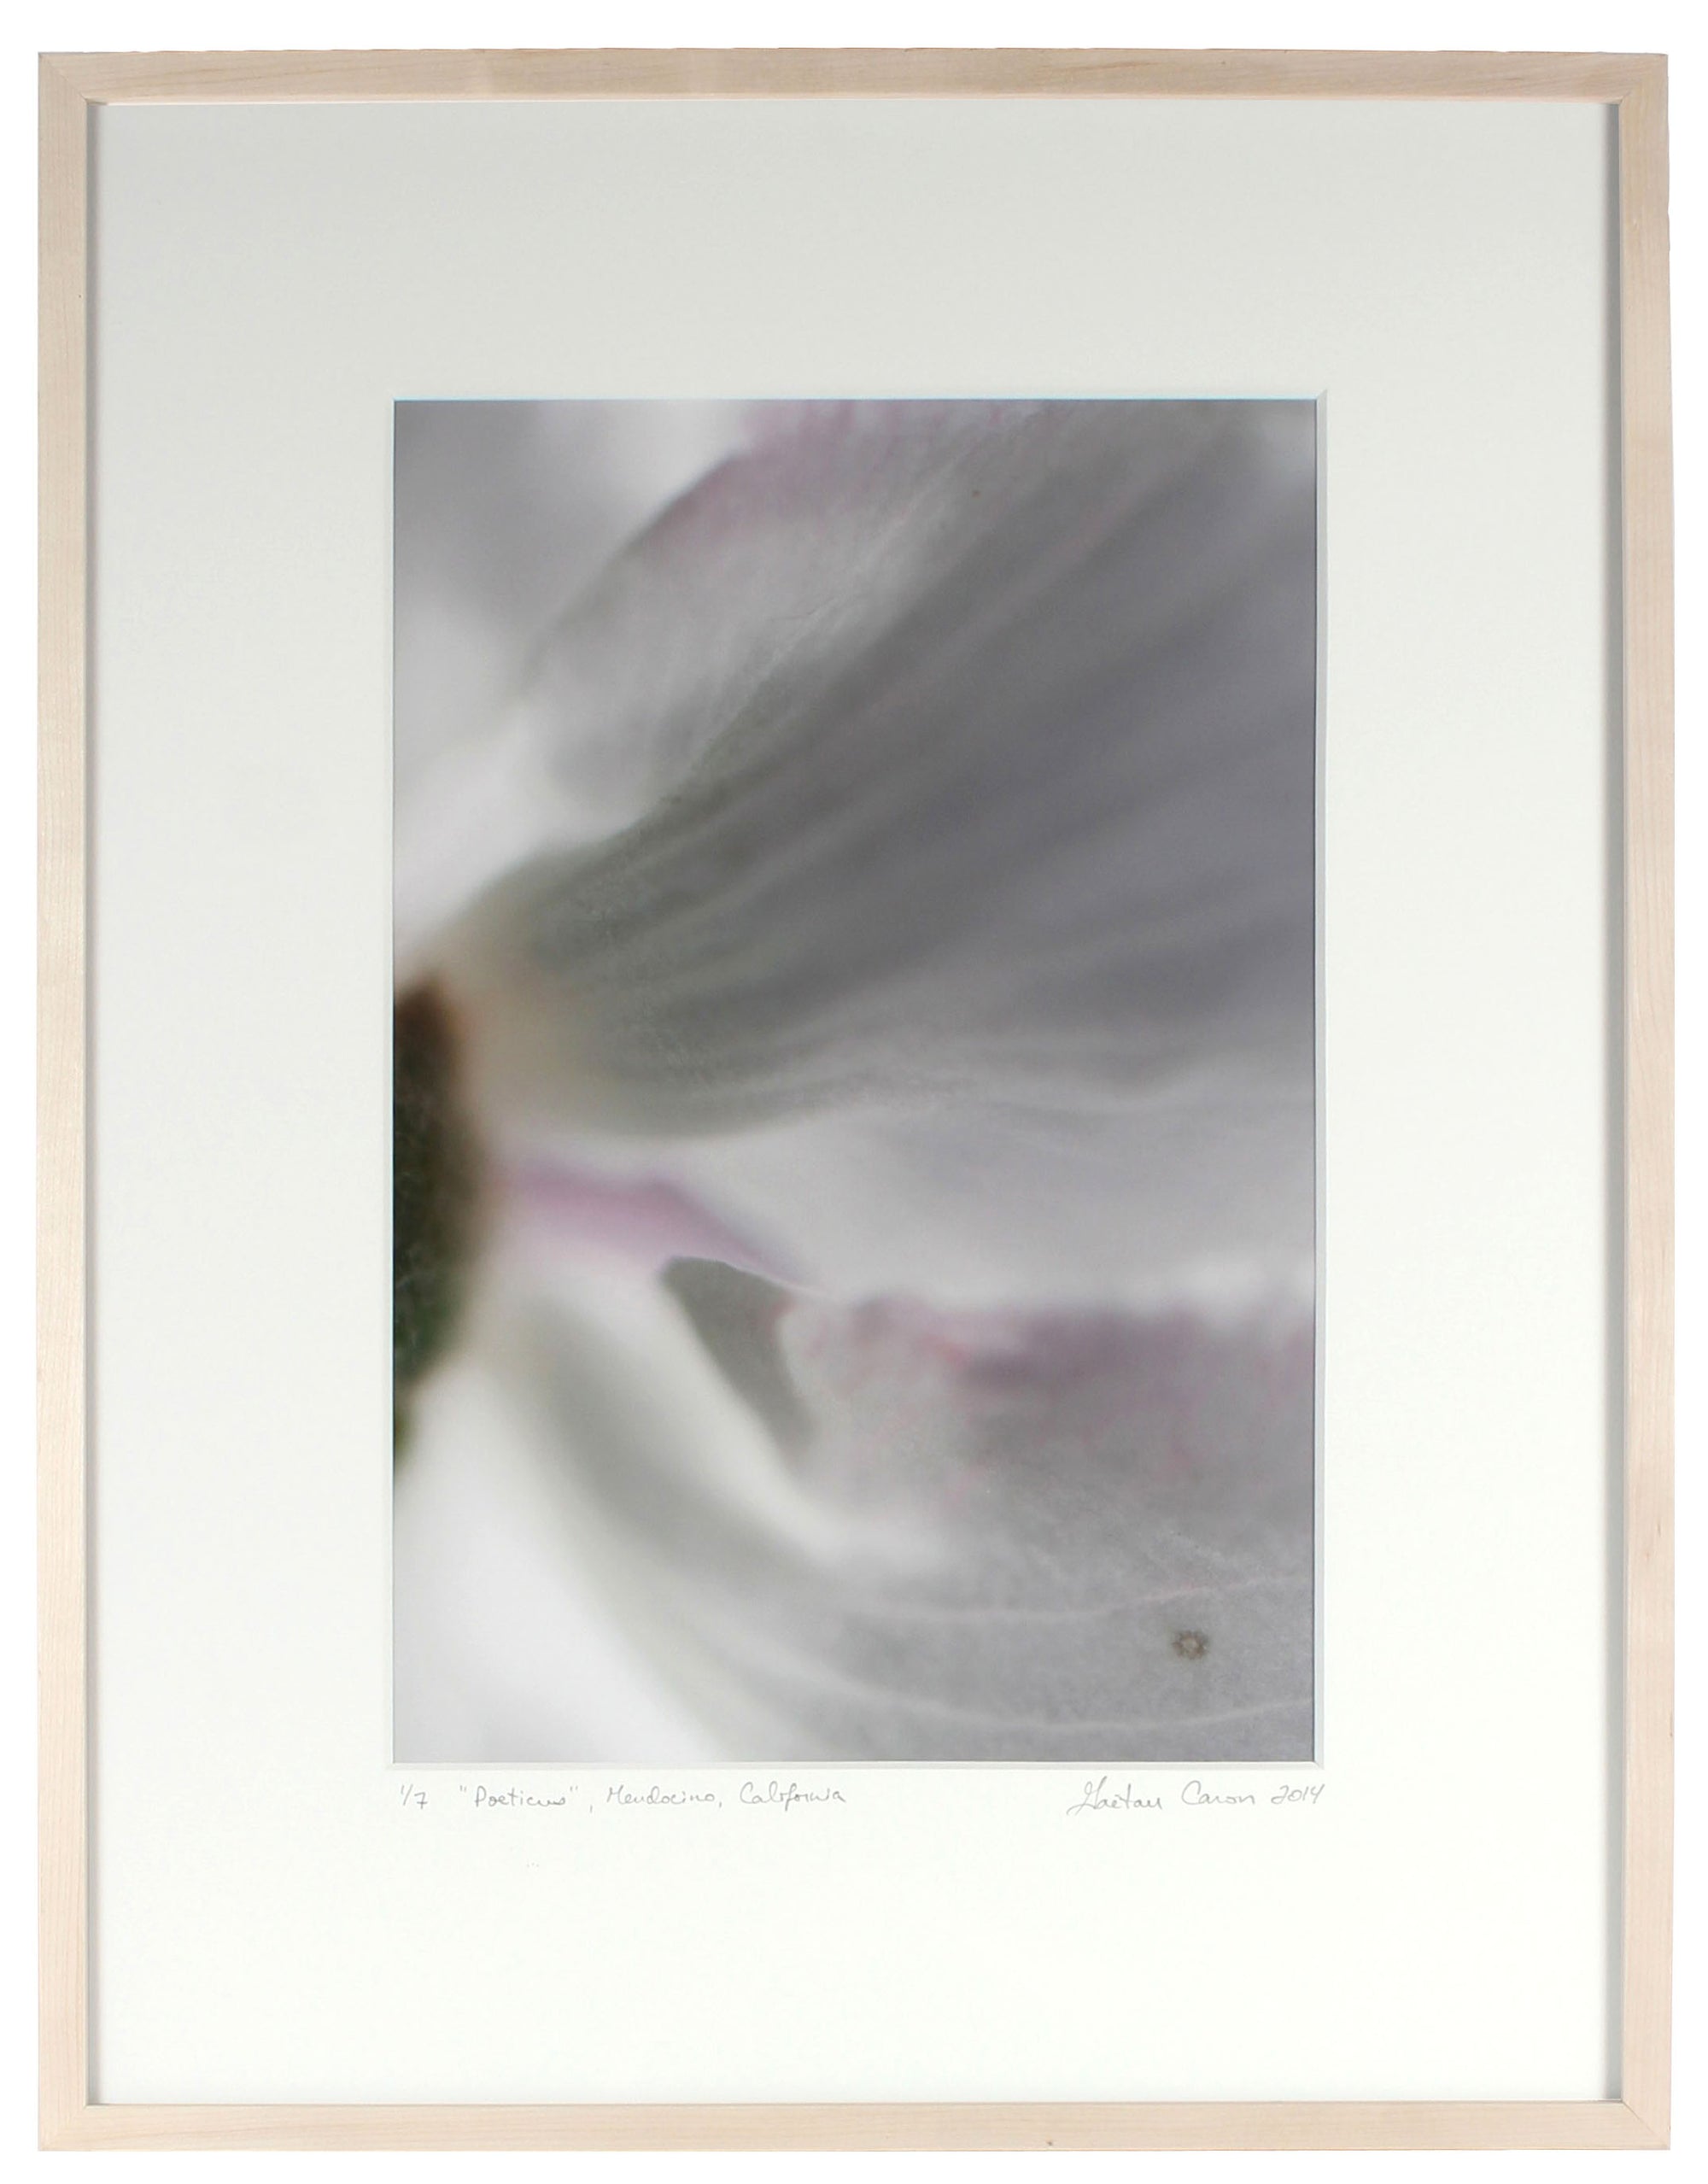 <I>Poeticus (Daffodil)</I><br>Mendocino, California, 2014<br><br>GC0385